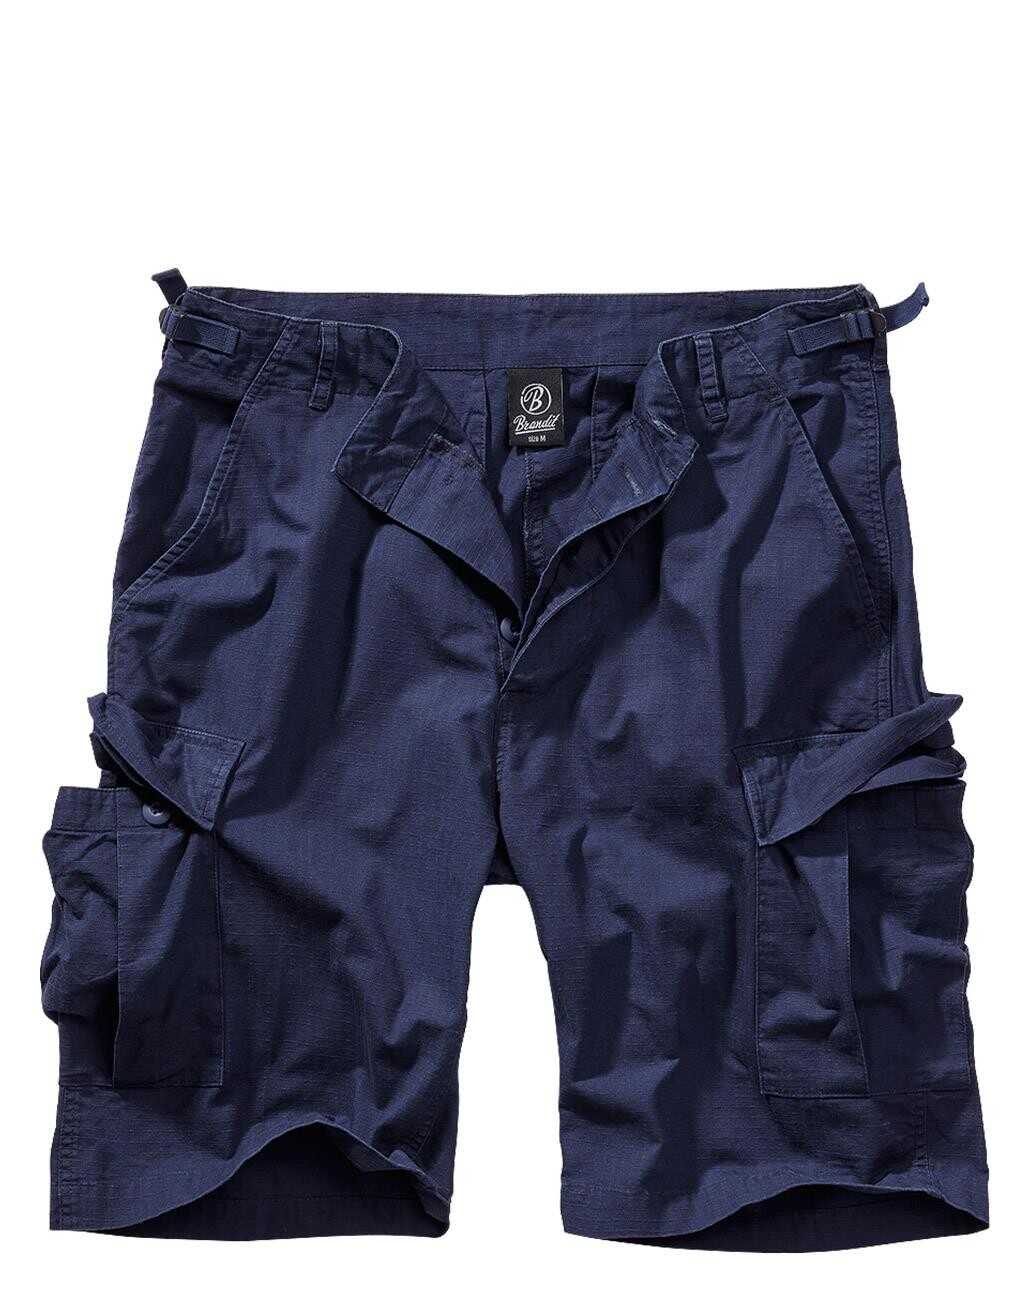 9: Brandit BDU Ripstop Shorts (Navy, M)